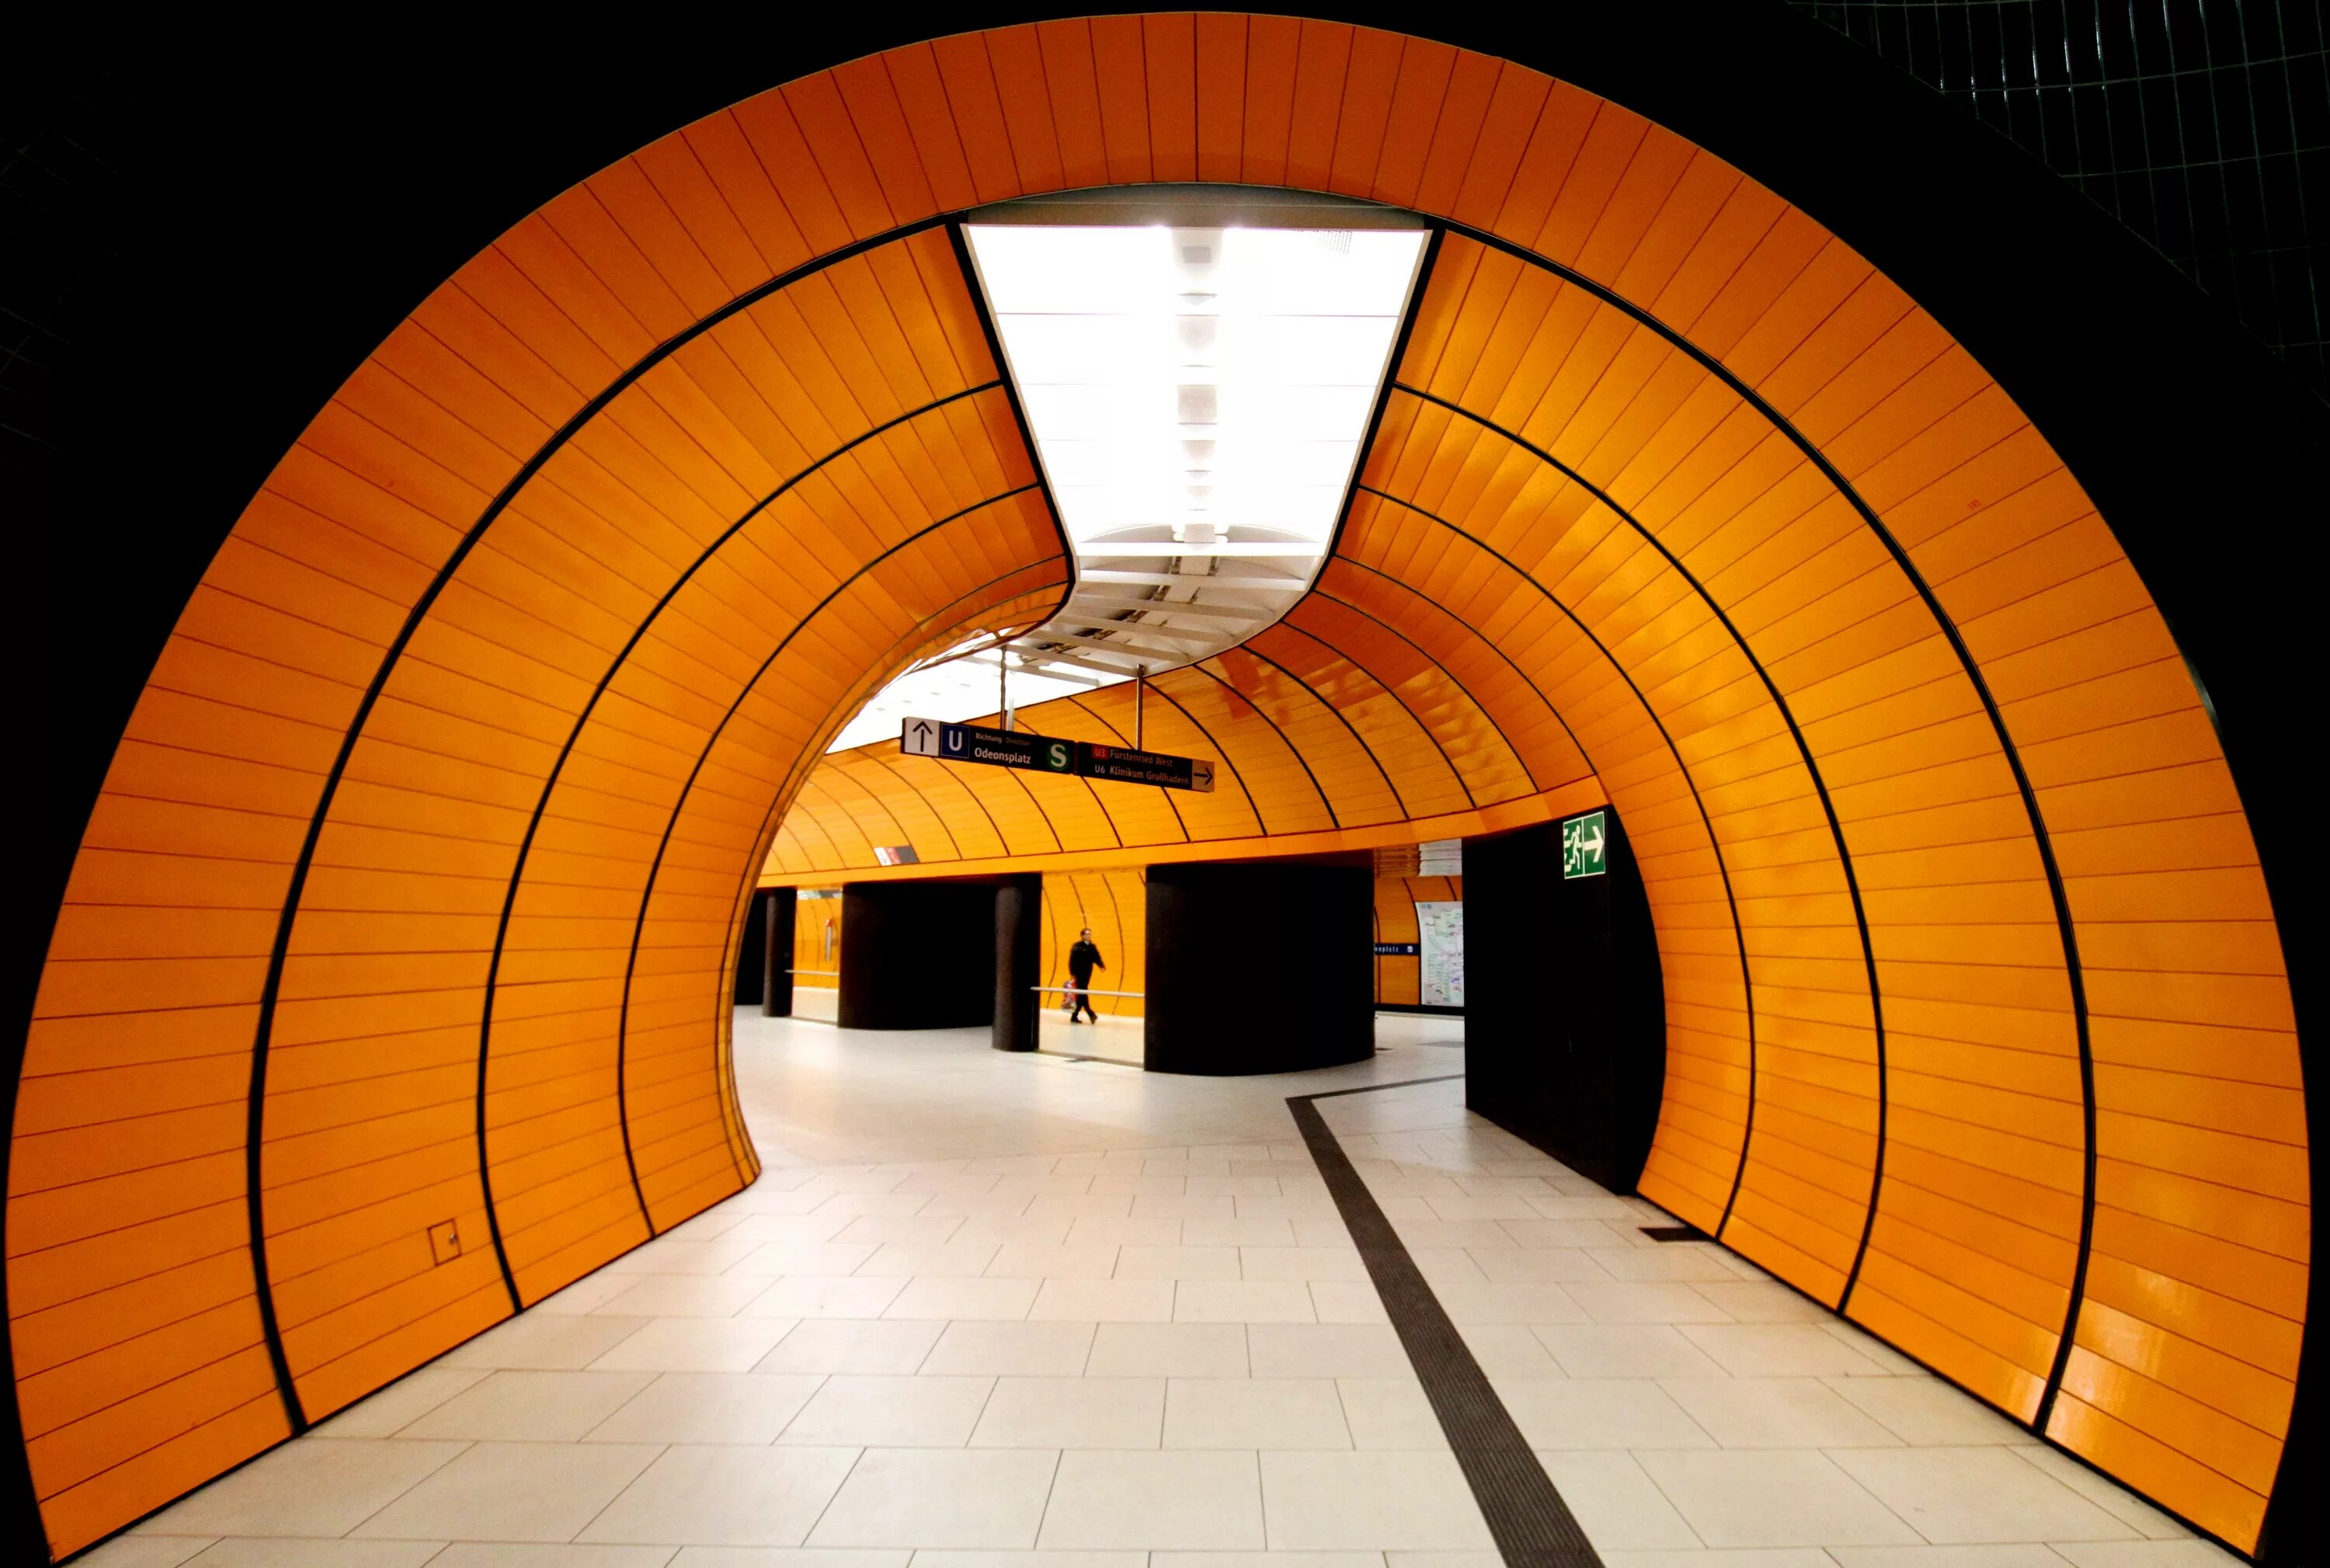 Включи оранжевую станцию. Станция "Георг-Браухле-ринг", Мюнхен, Германия. Оранжевая станция. Оранжевое метро. Туннель оранжевый.